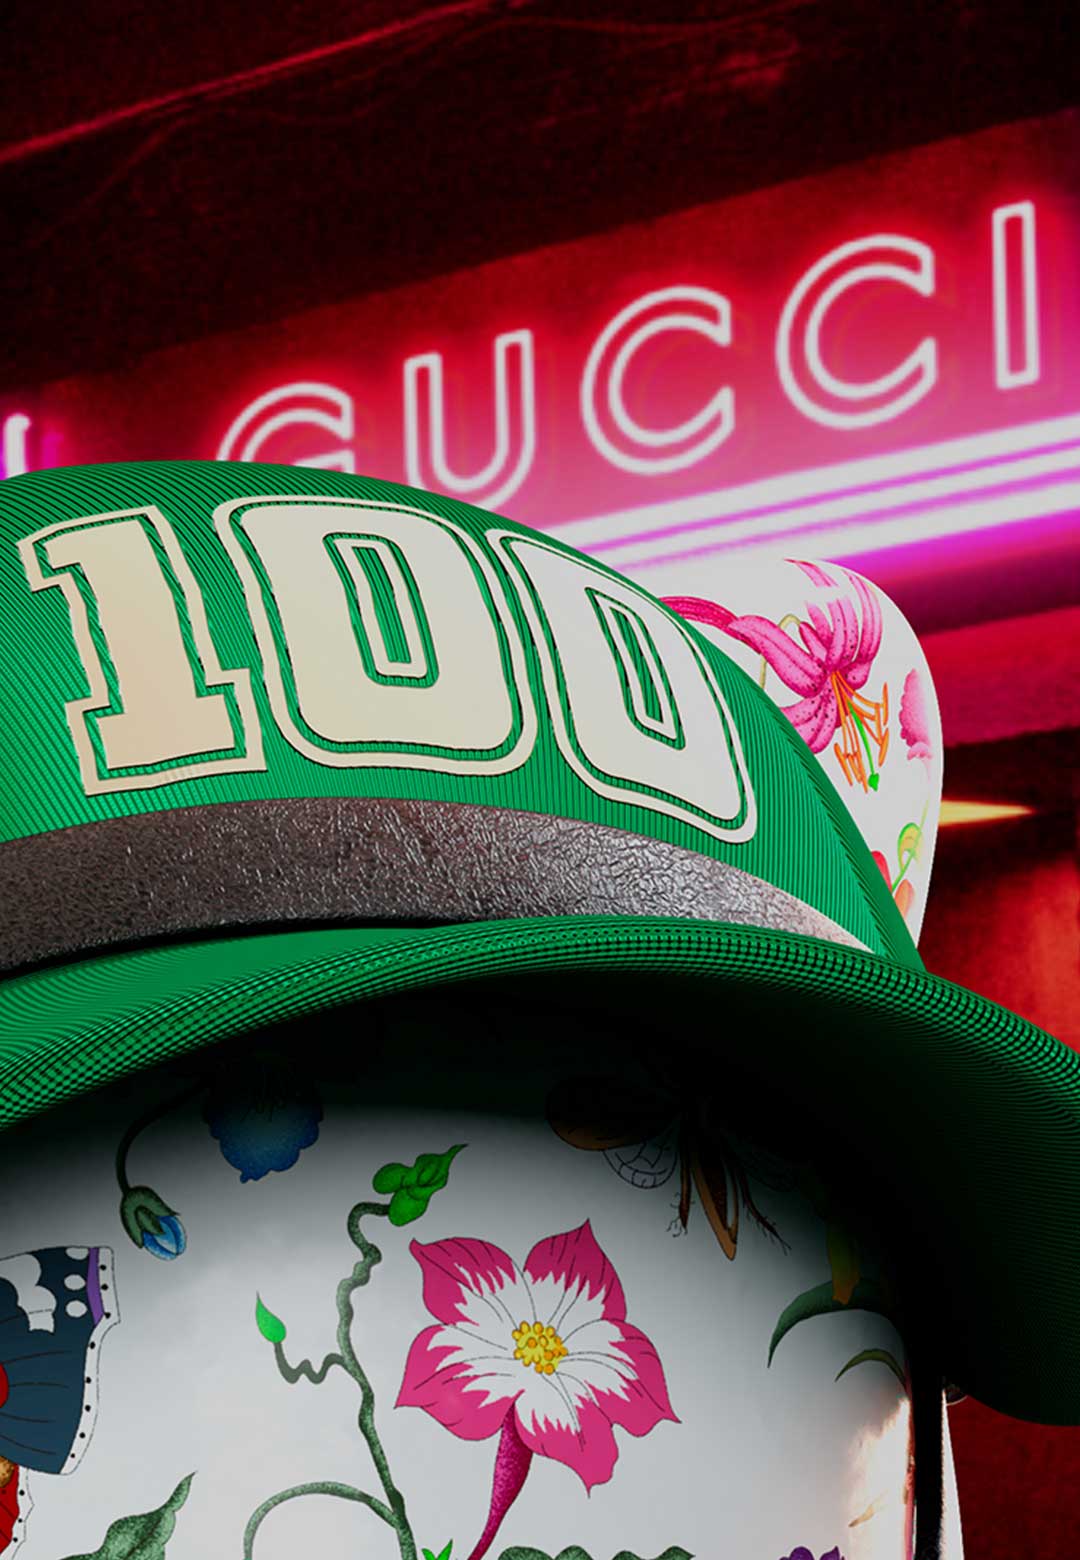 Gucci x Superplastic set to launch SUPERGUCCI NFTs